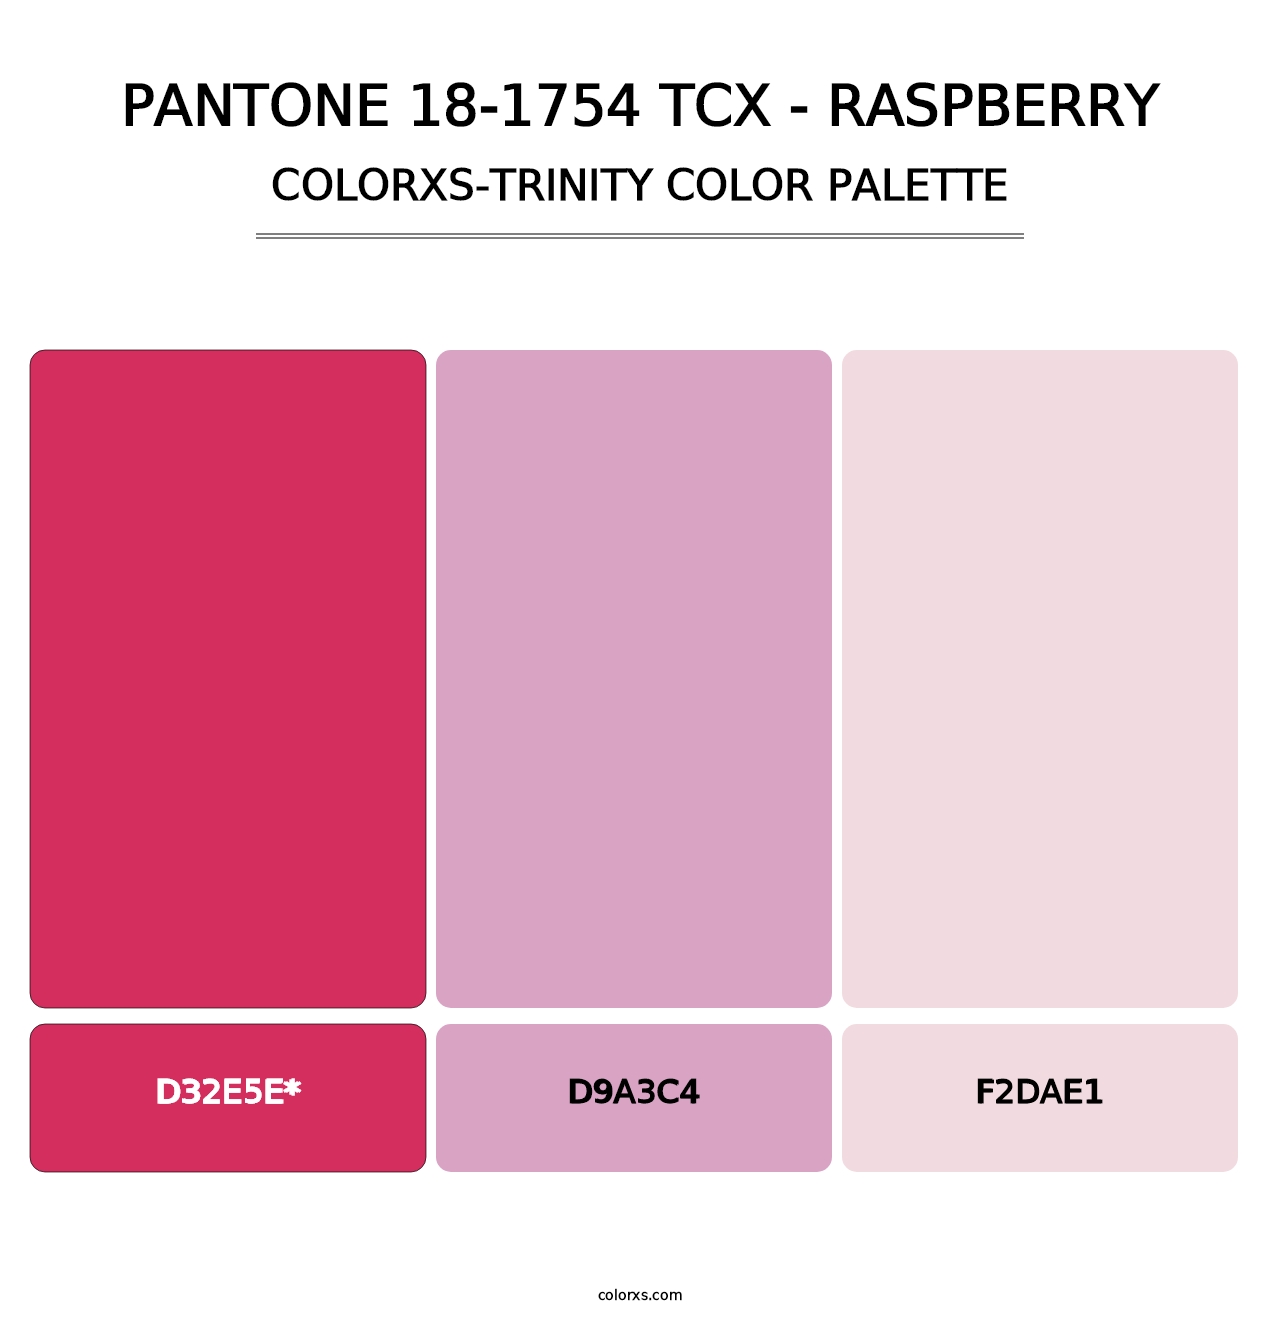 PANTONE 18-1754 TCX - Raspberry - Colorxs Trinity Palette